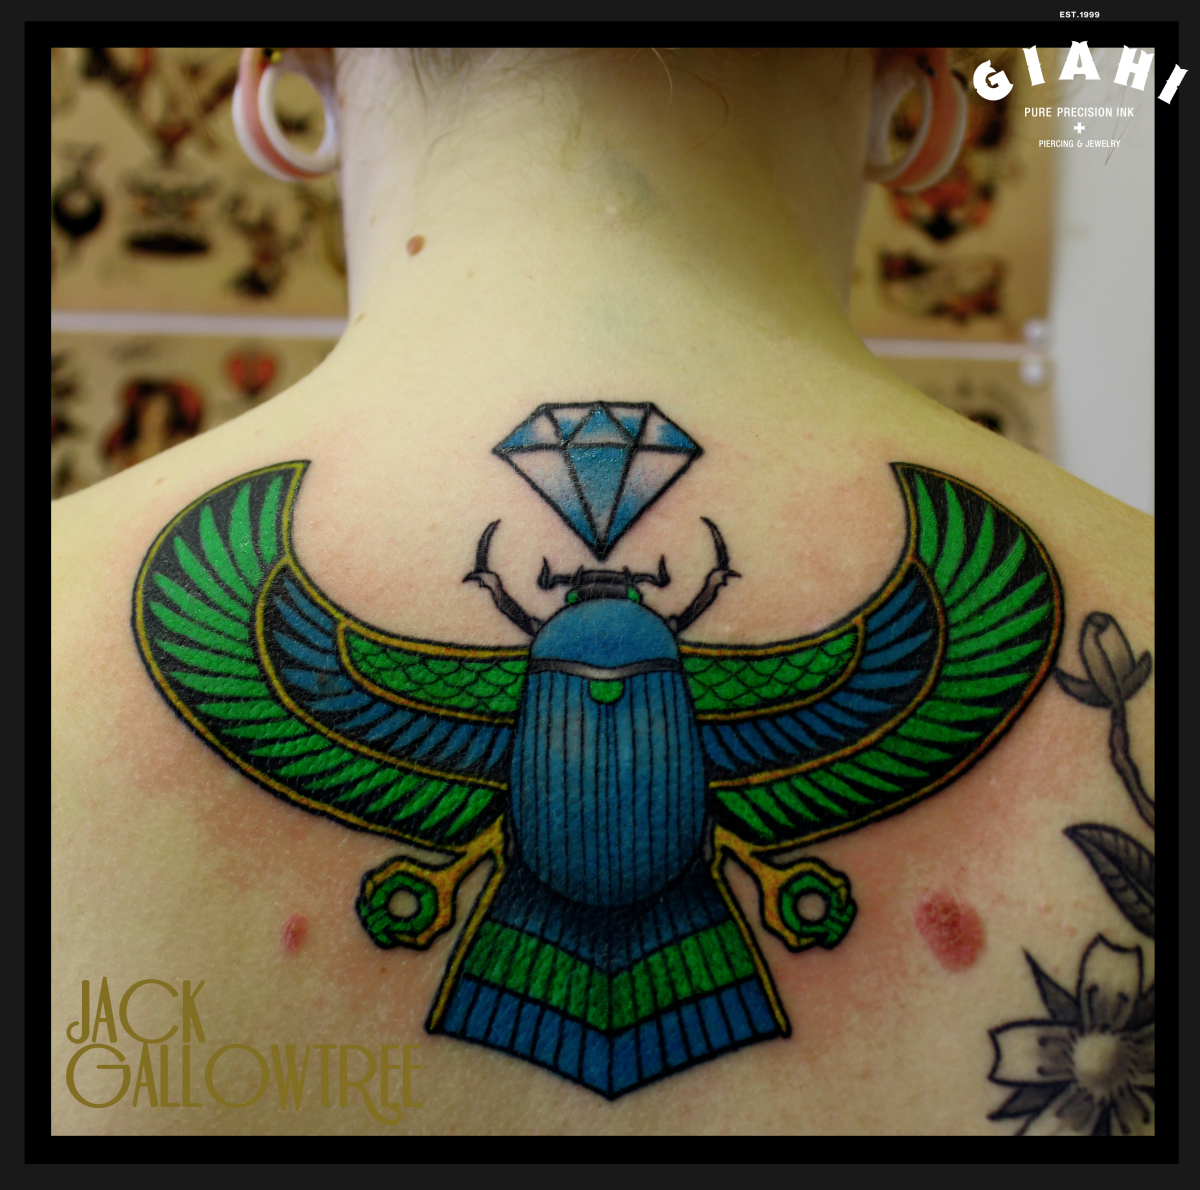 Dimond Egypt Bug tattoog by Jack Gallowtree